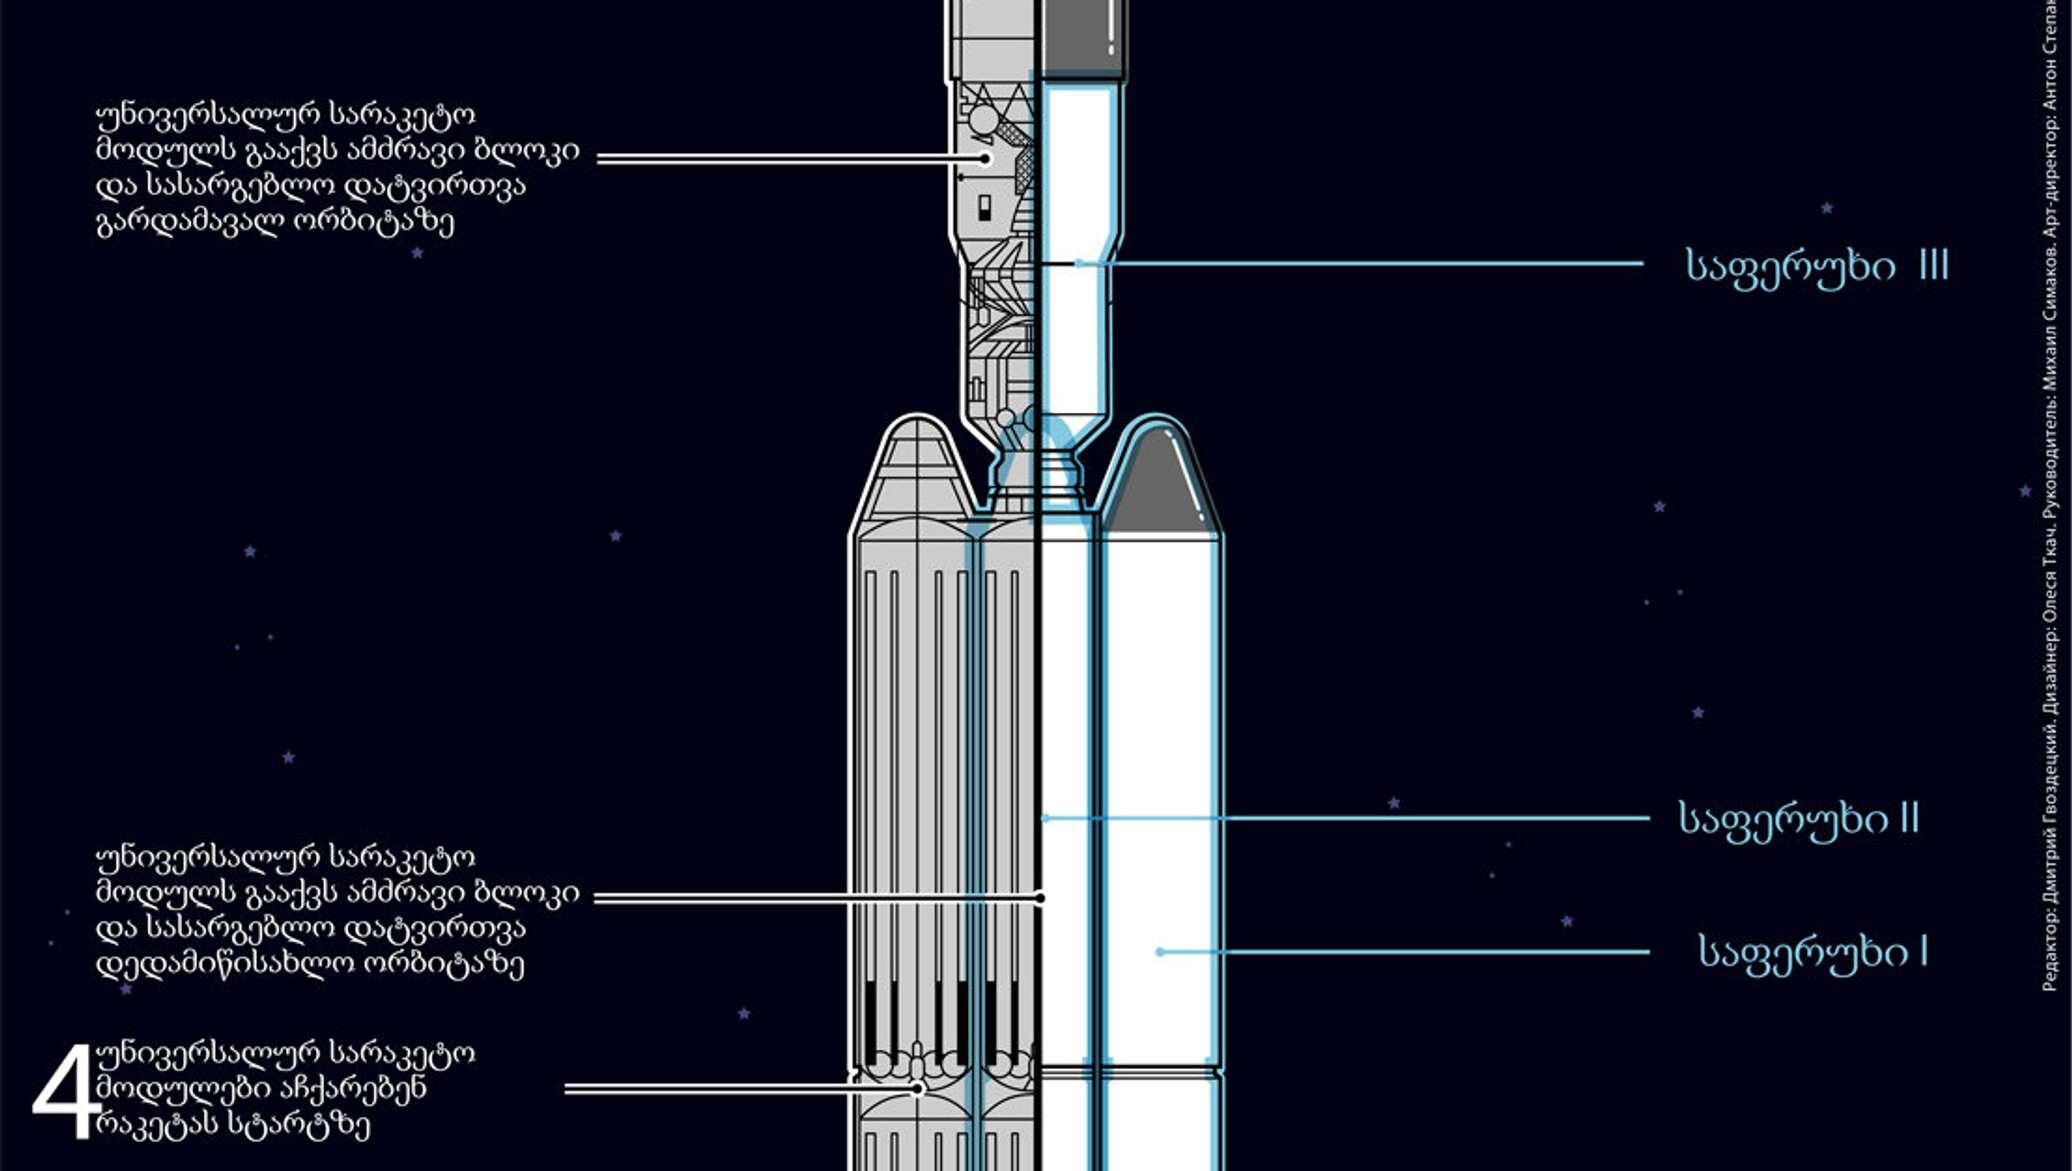 Ангара а5 размеры. Ракета-носитель "Ангара-а5". Ракета Ангара а5 чертеж. Ракета носитель Ангара а5 чертеж. Ангара-а5/Персей схема.